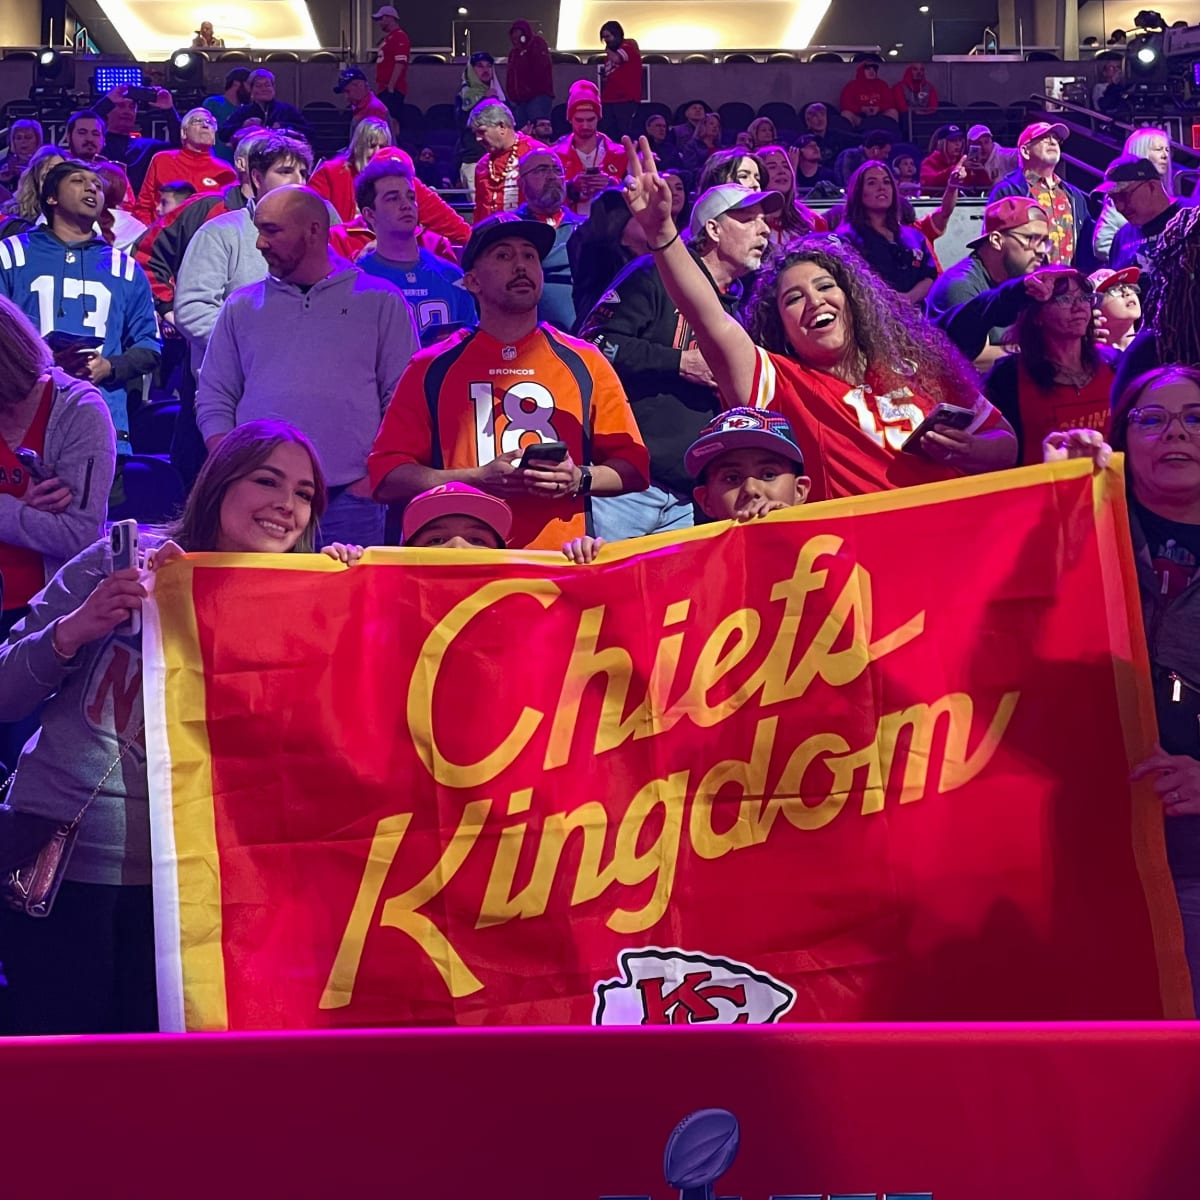 Kansas City Chiefs Shirt, Professional Mascot 2023 Super Bowl LVII